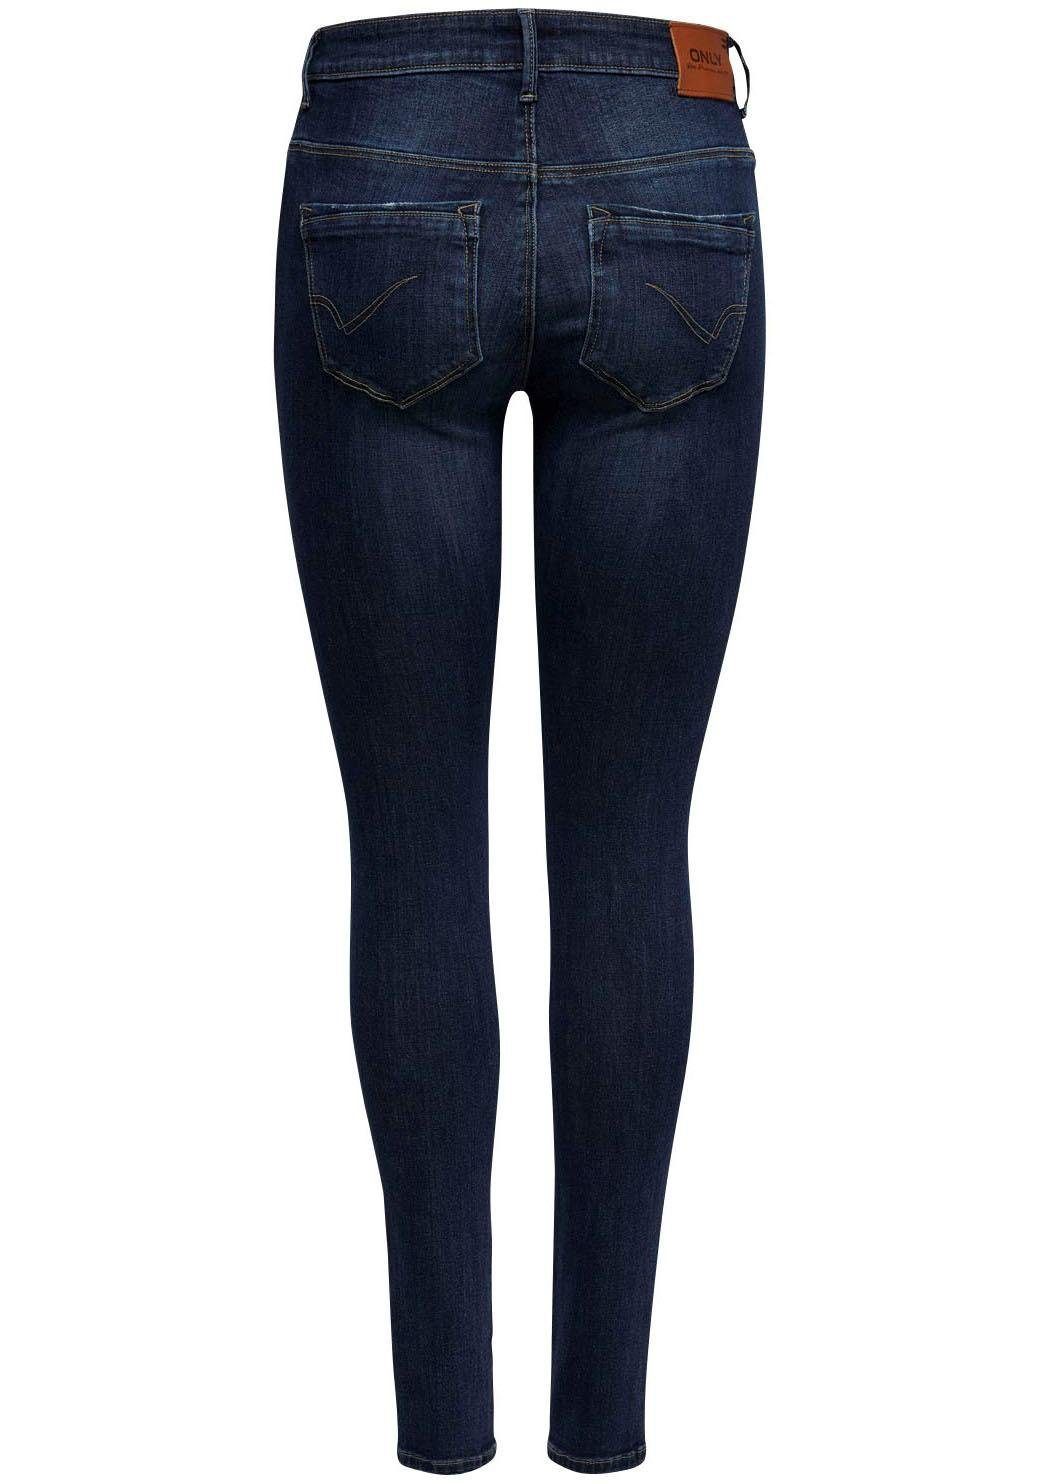 ONLY Skinny-fit-Jeans HW dark blue DNM SK denim AZGZ878 ONLPAOLA